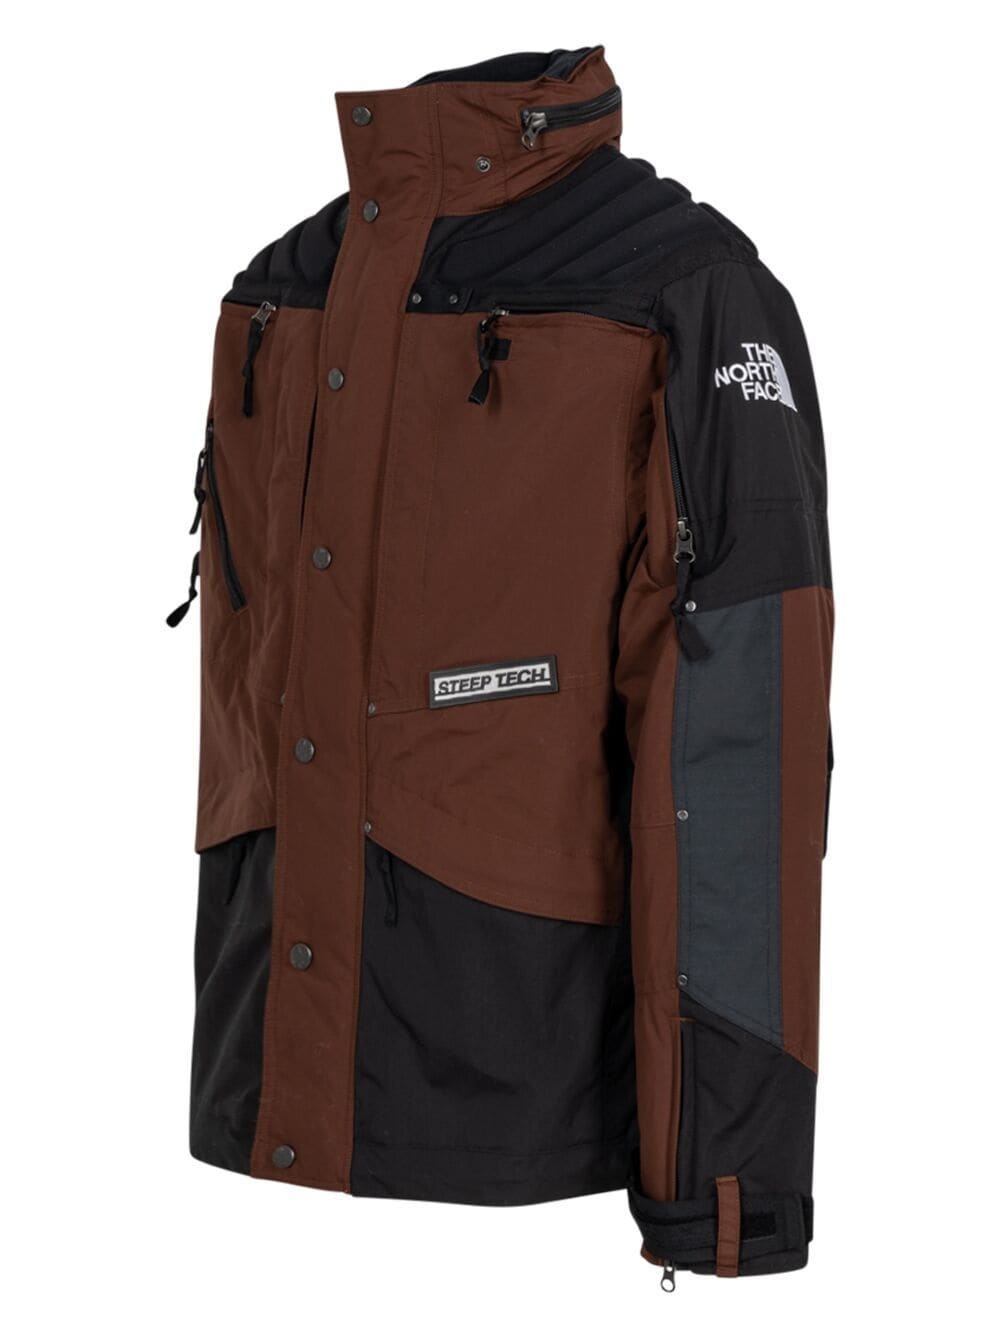 x The North Face Steep Tech Apogee jacket - 2